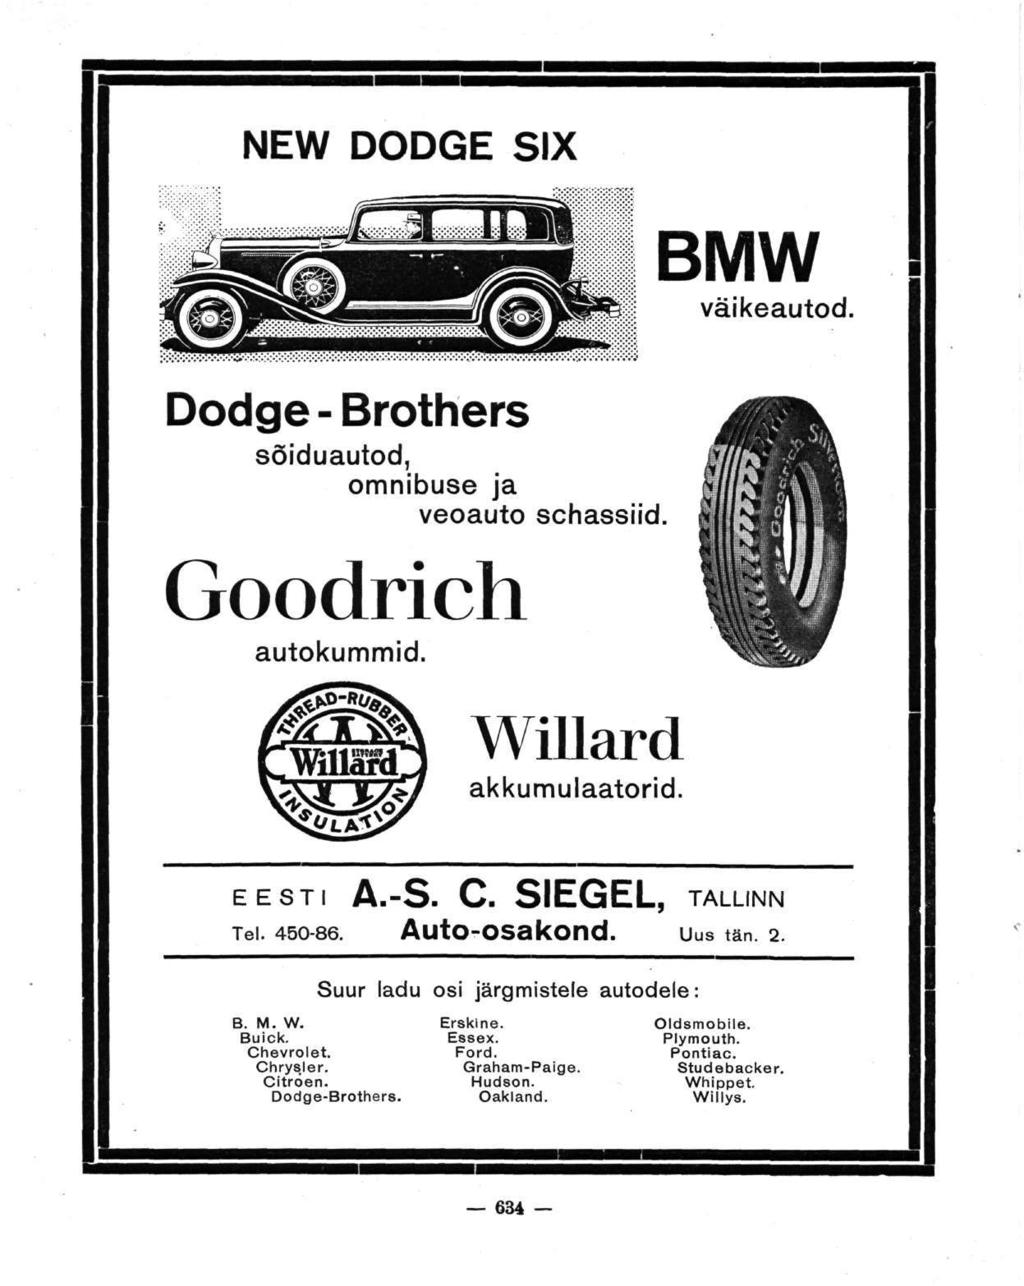 NEW DODGE SIX Dodge - Brothers sõiduautod, omnibuse ja veoauto schassiid. Goodrich autokummid. BMW väikeautod. ушам: Willard akkumulaatorid. EESTI A.-S. С. SIEGEL, TALLINN Tel. 450-86. AutO-OSakOnd.